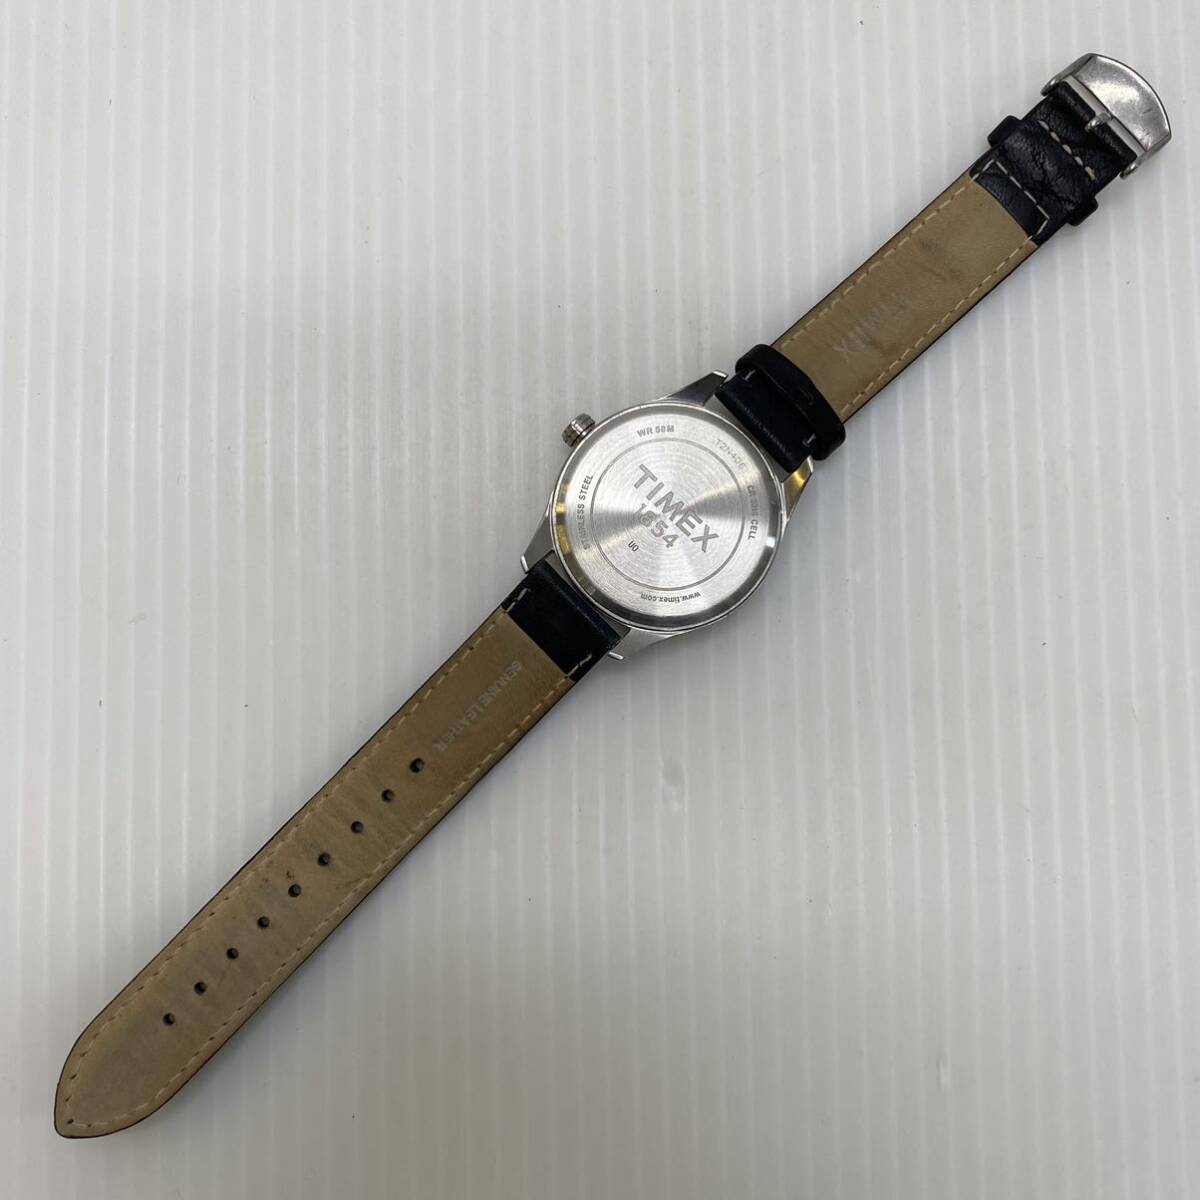 TIMEX Timex наручные часы кварц тип аккумулятора аналог 3 стрелки Date календарь чёрный циферблат Beams T2N406 Indy Glo рабочий товар передвижной товар 